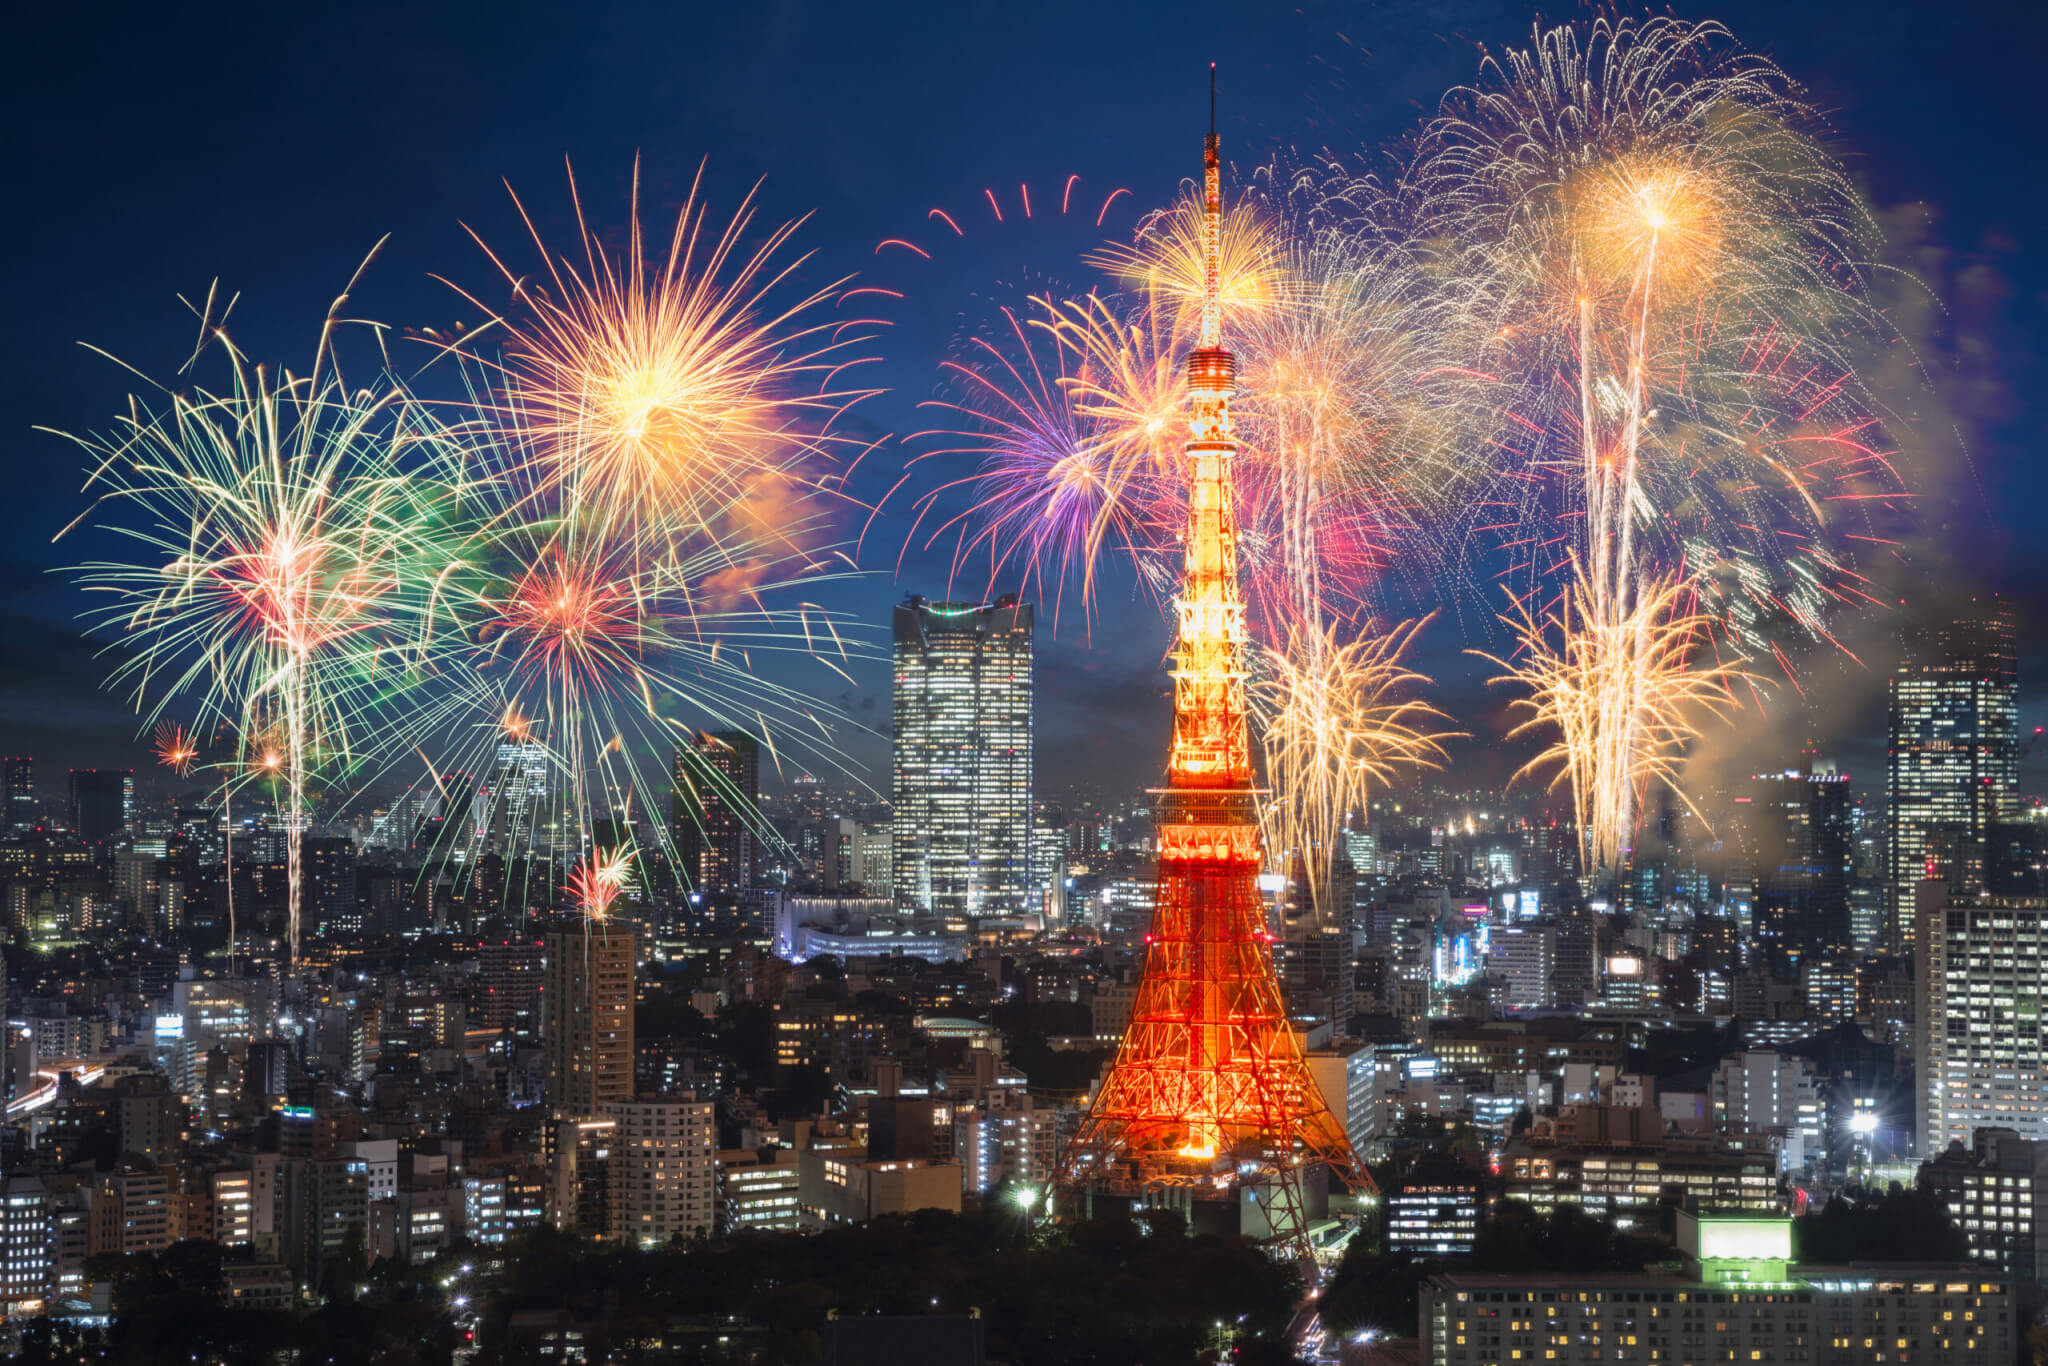 Fireworks celebrating over tokyo cityscape at night, Tokyo Japan